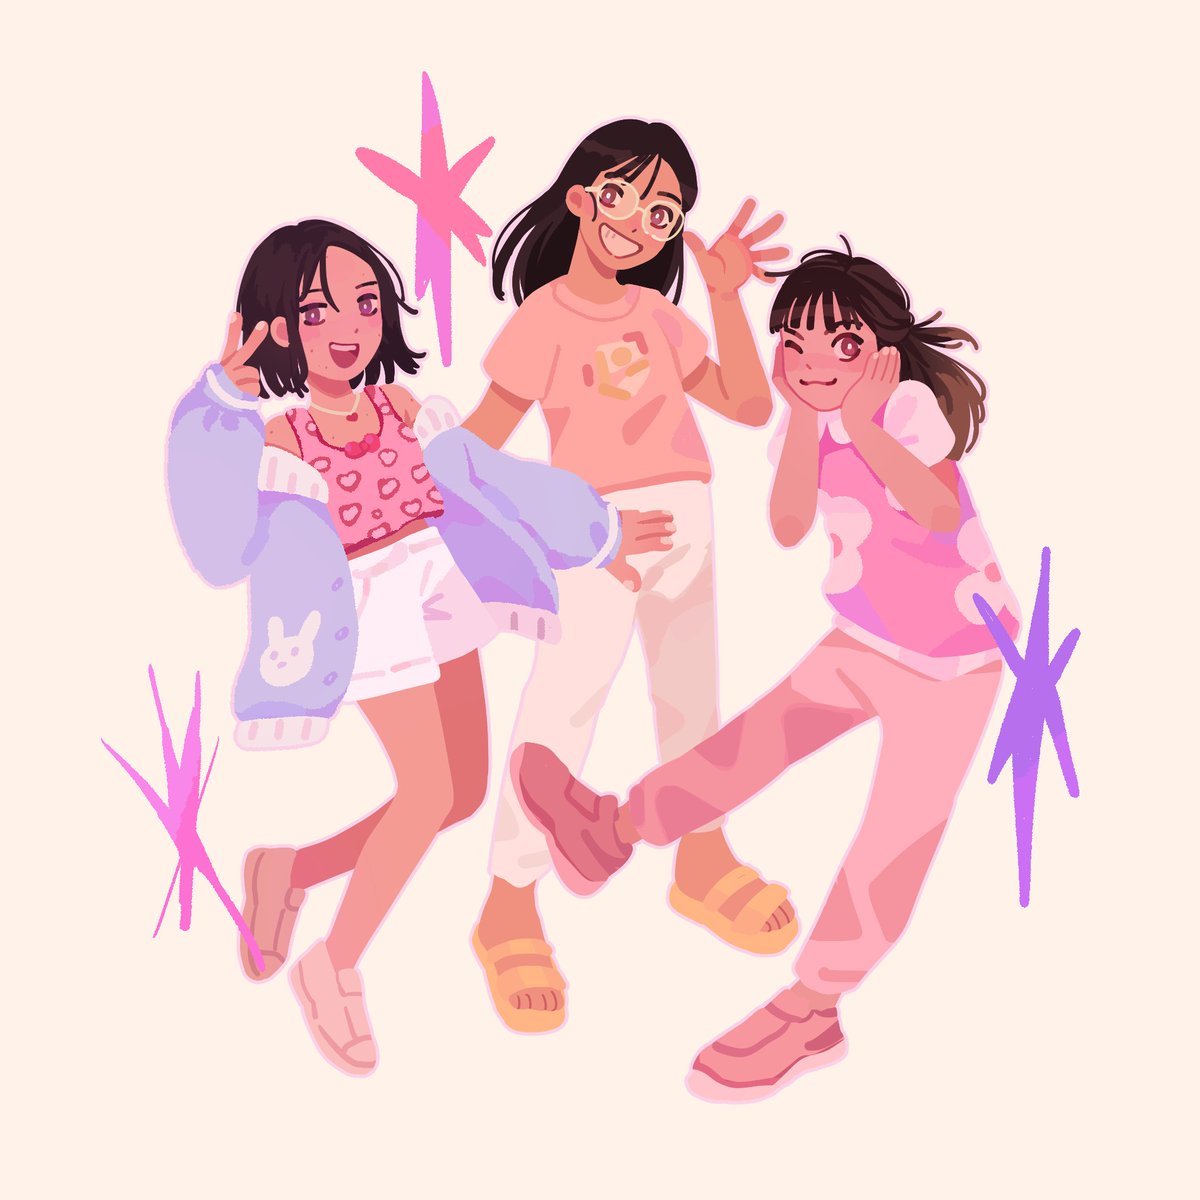 multiple girls 3girls pants pink shirt shirt smile black background  illustration images